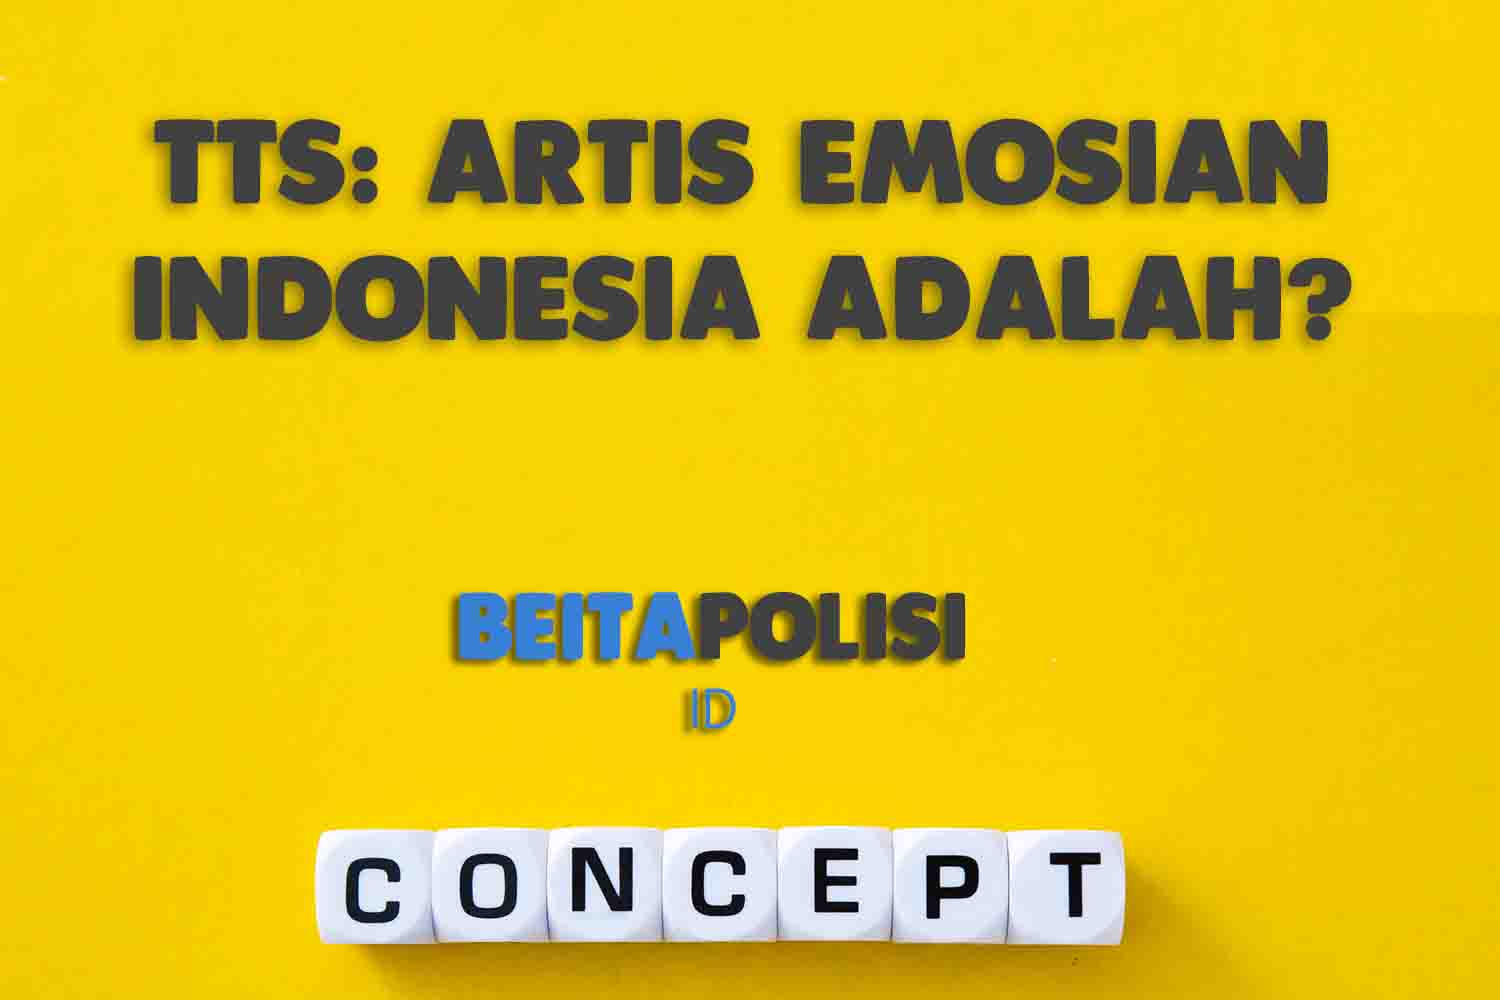 Tts Artis Emosian Indonesia Adalah Berikut Adalah Jawaban Tebak Tebakan Atau Teka Teki Jokes Lucu Artis